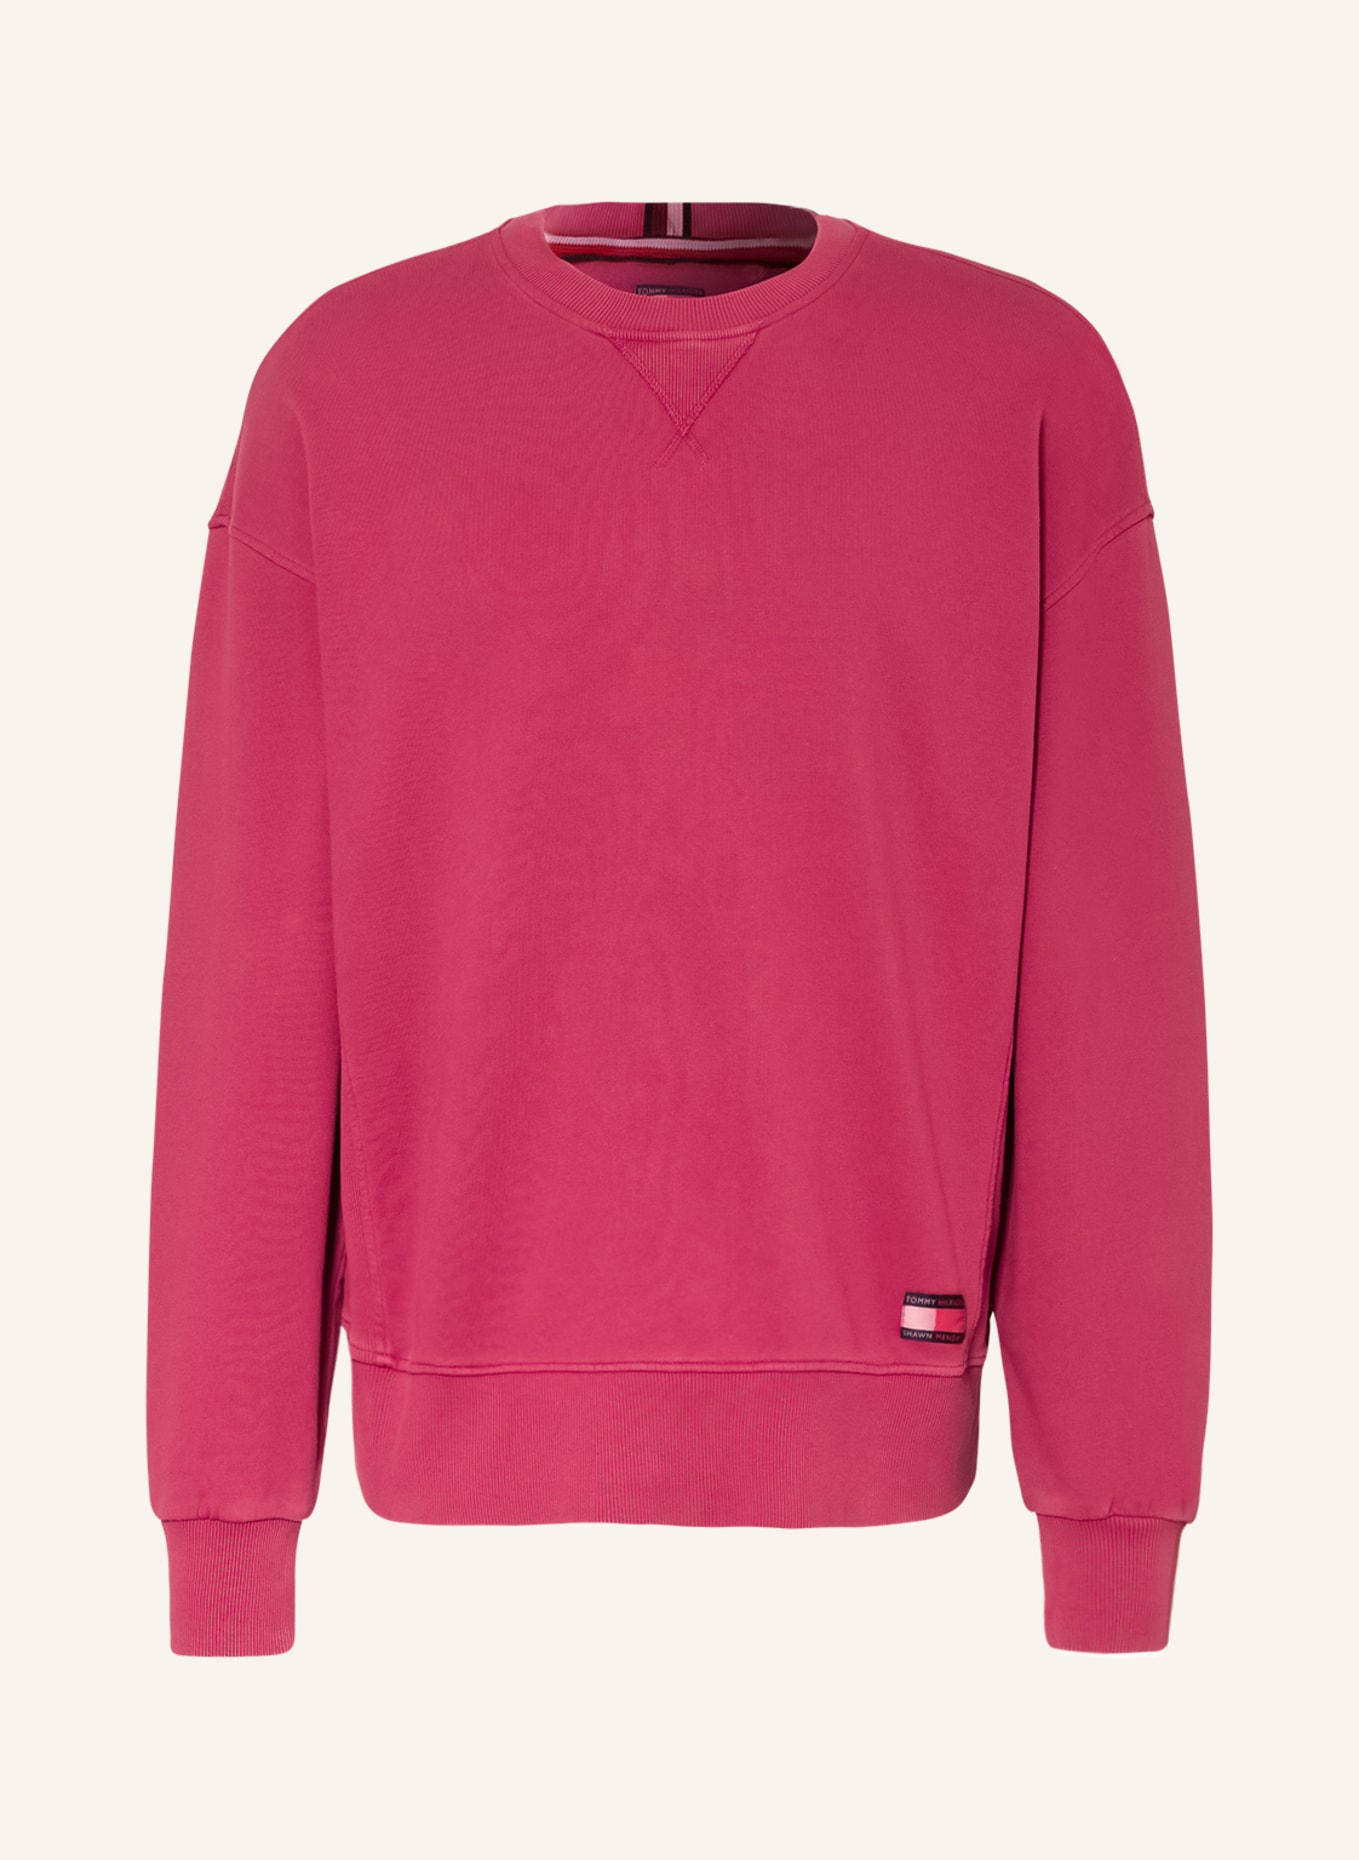 TOMMY HILFIGER Sweatshirt, Farbe: DUNKELROT (Bild 1)